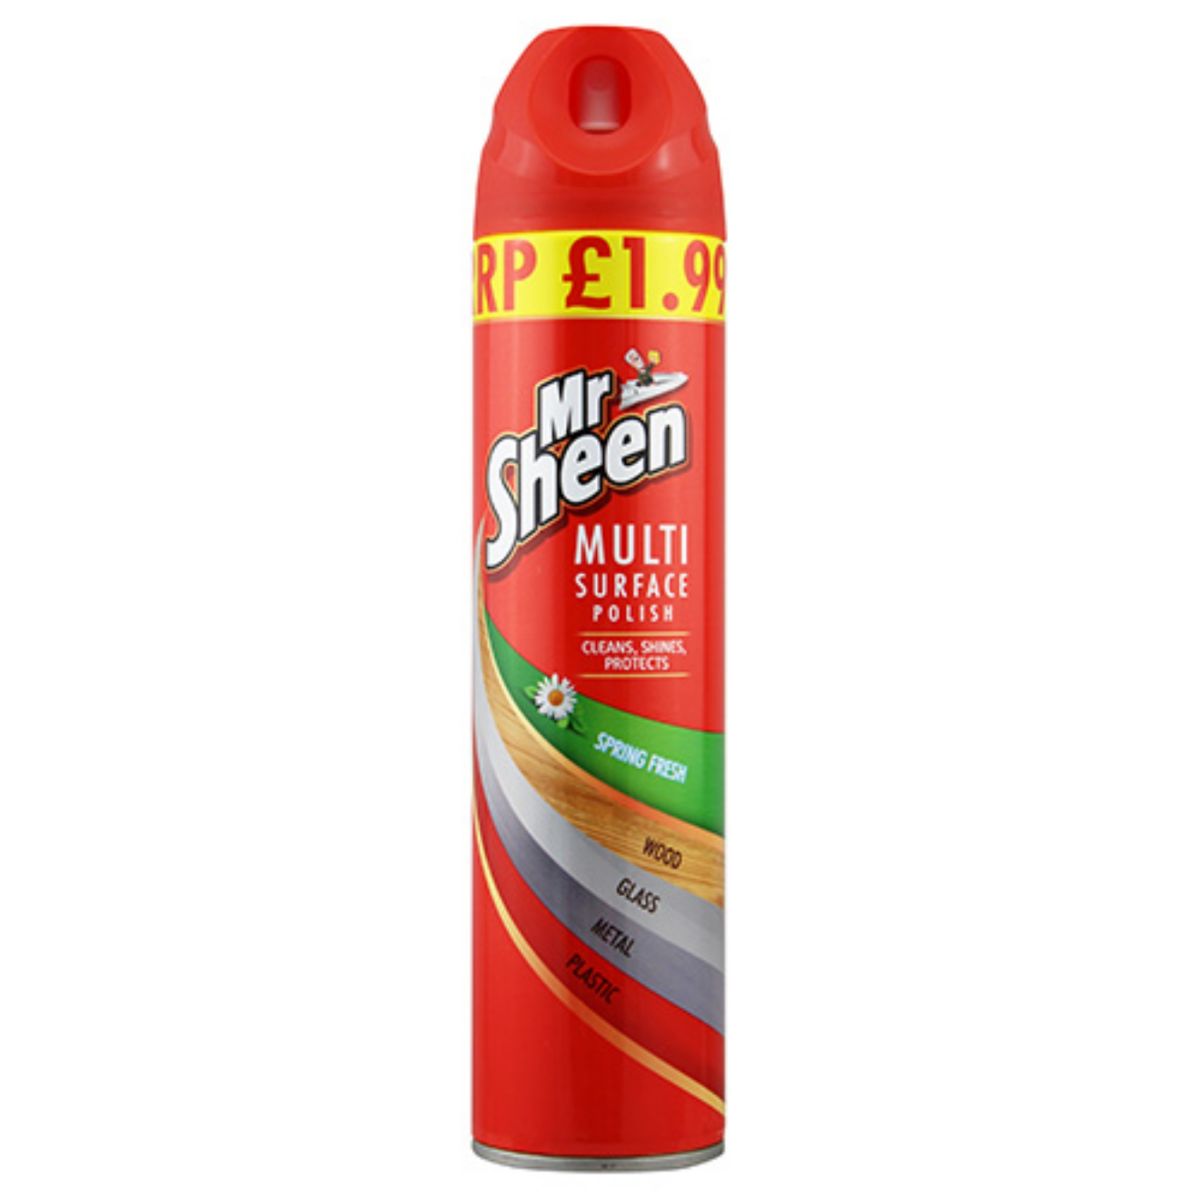 Mr Sheen - Polish Spring Fresh - 250ml spray.